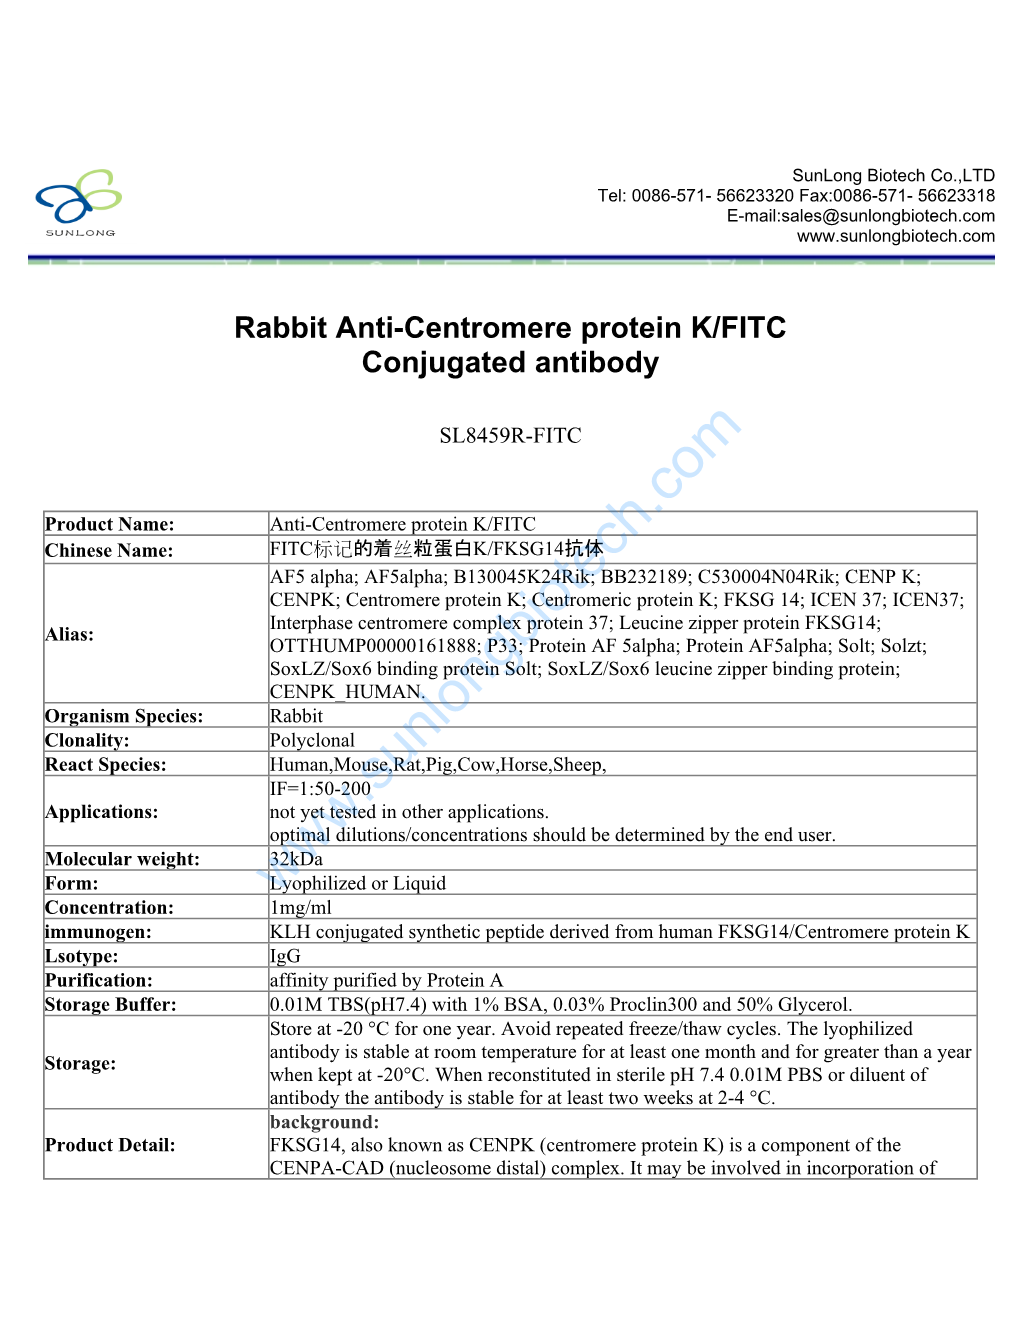 Rabbit Anti-Centromere Protein K/FITC Conjugated Antibody